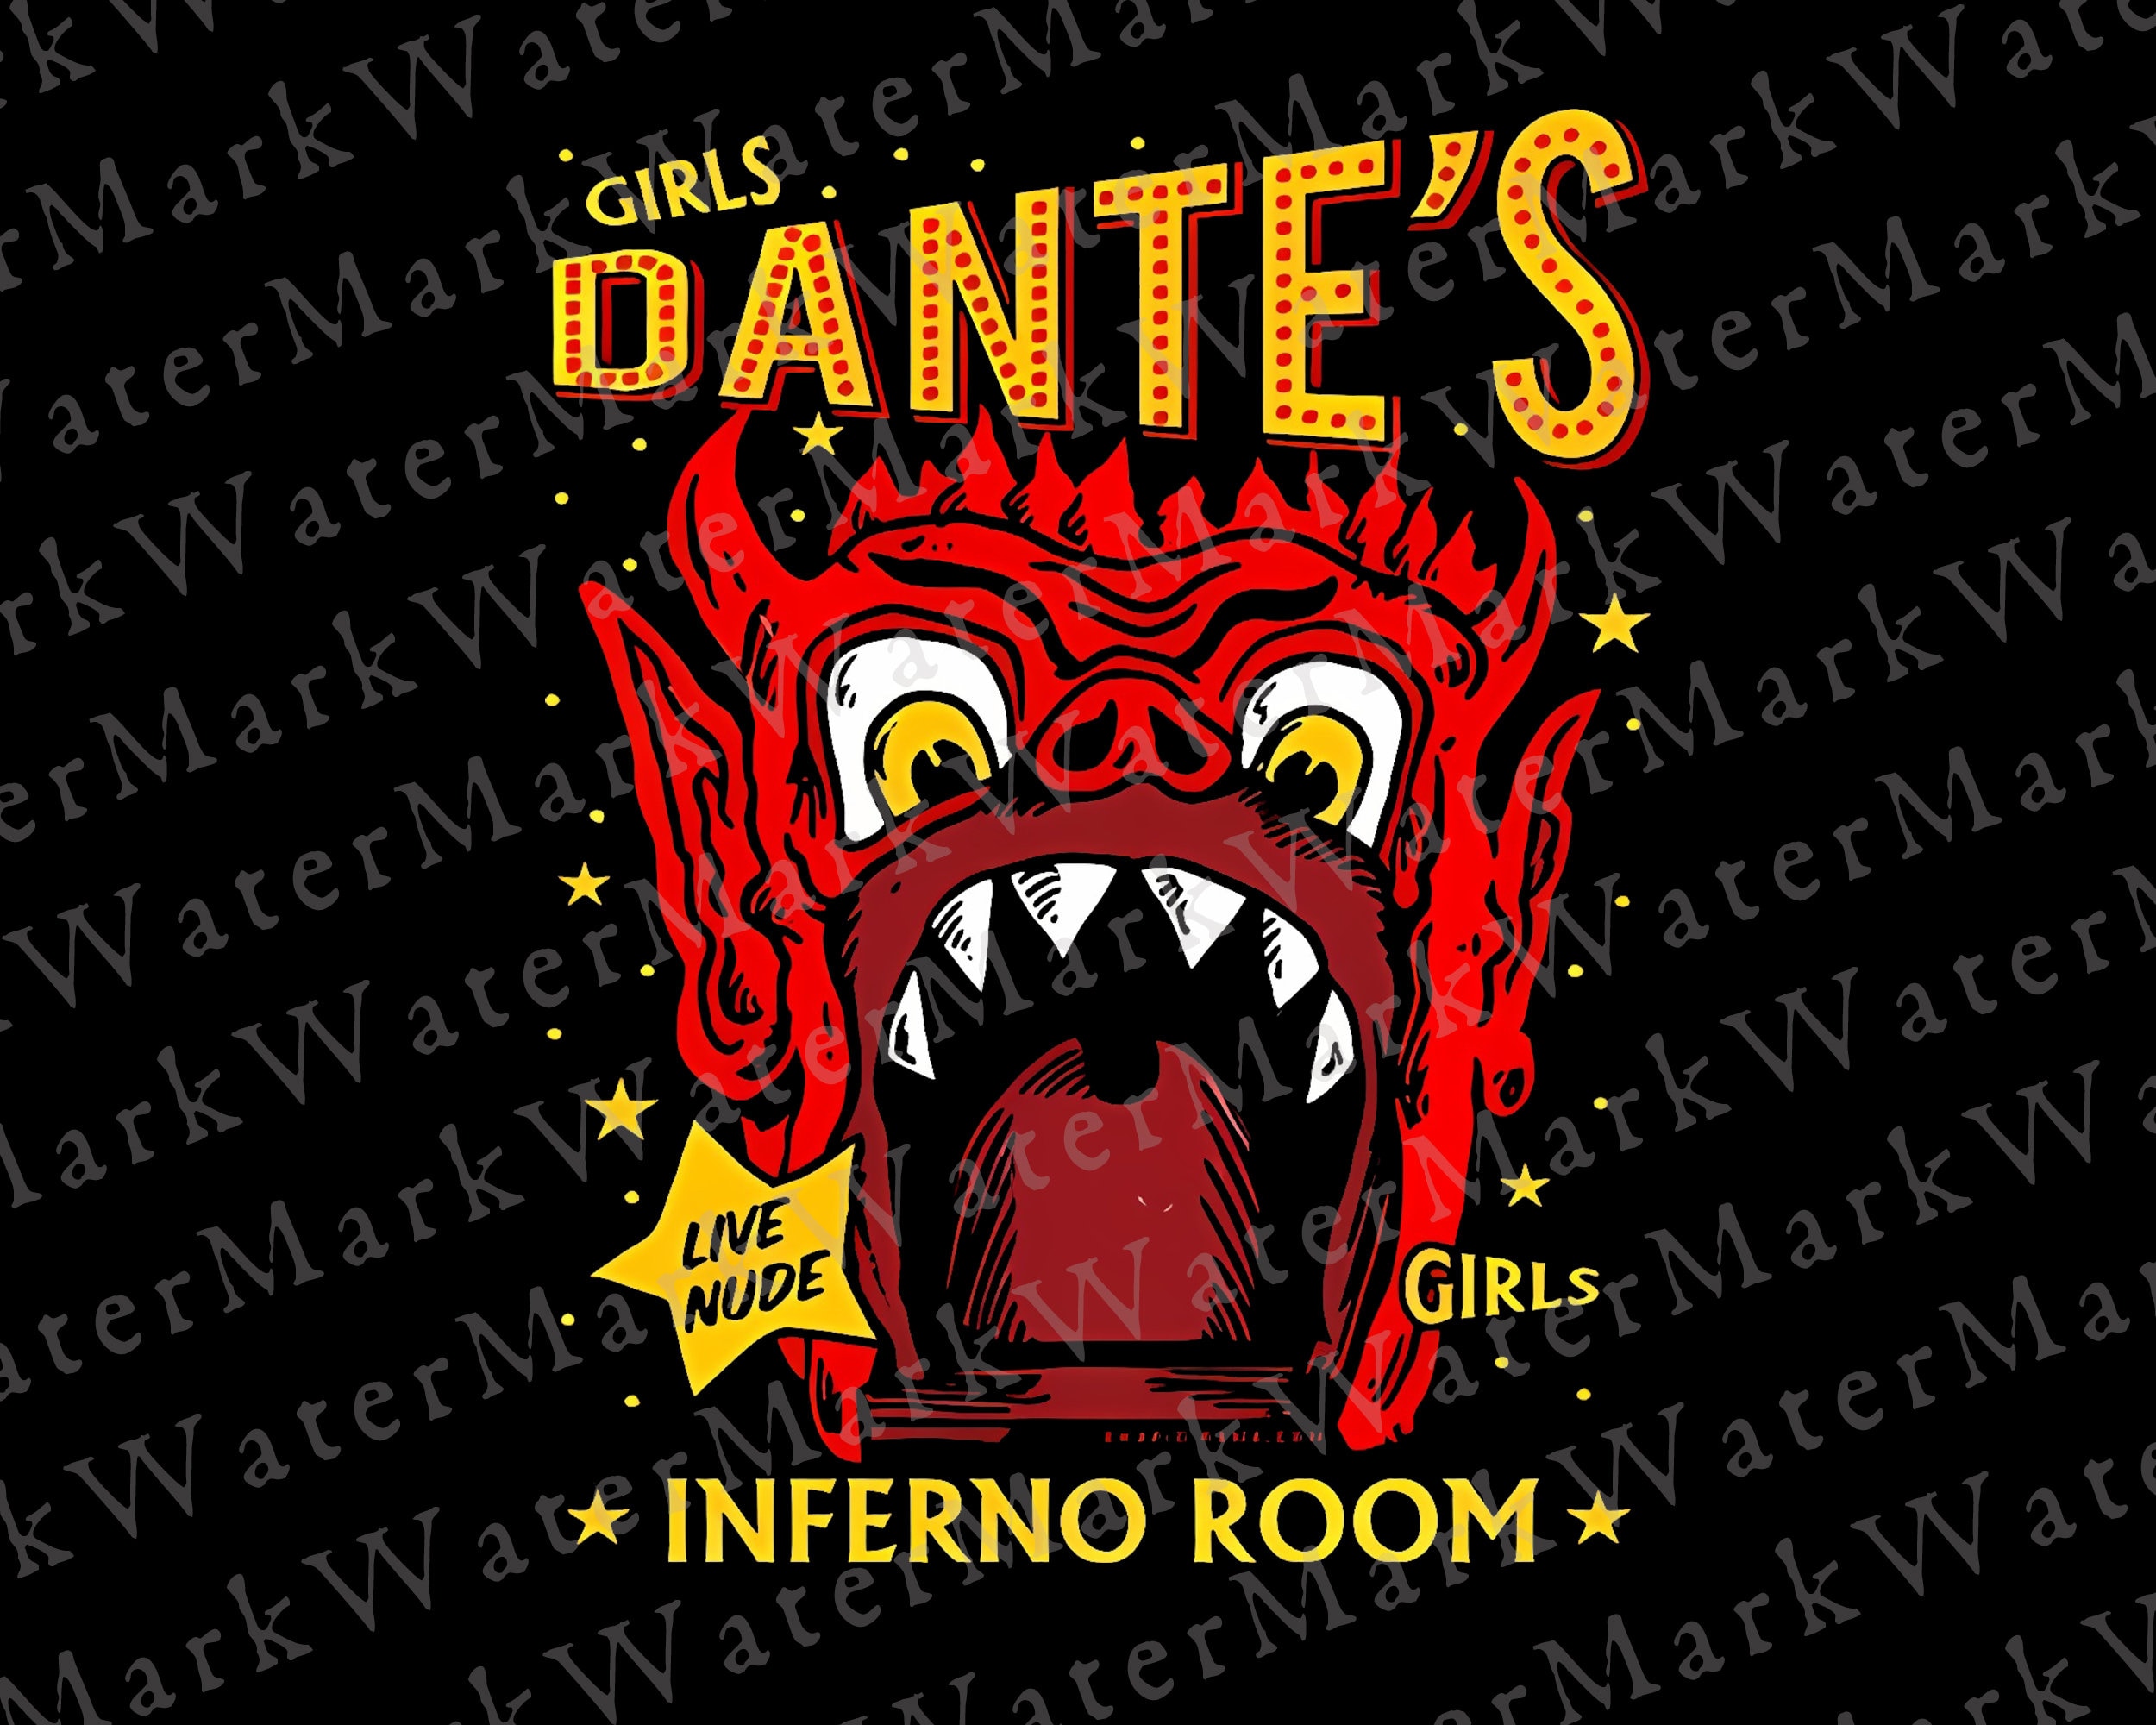 Beetlejuice Dante’s Inferno 8x11 art print